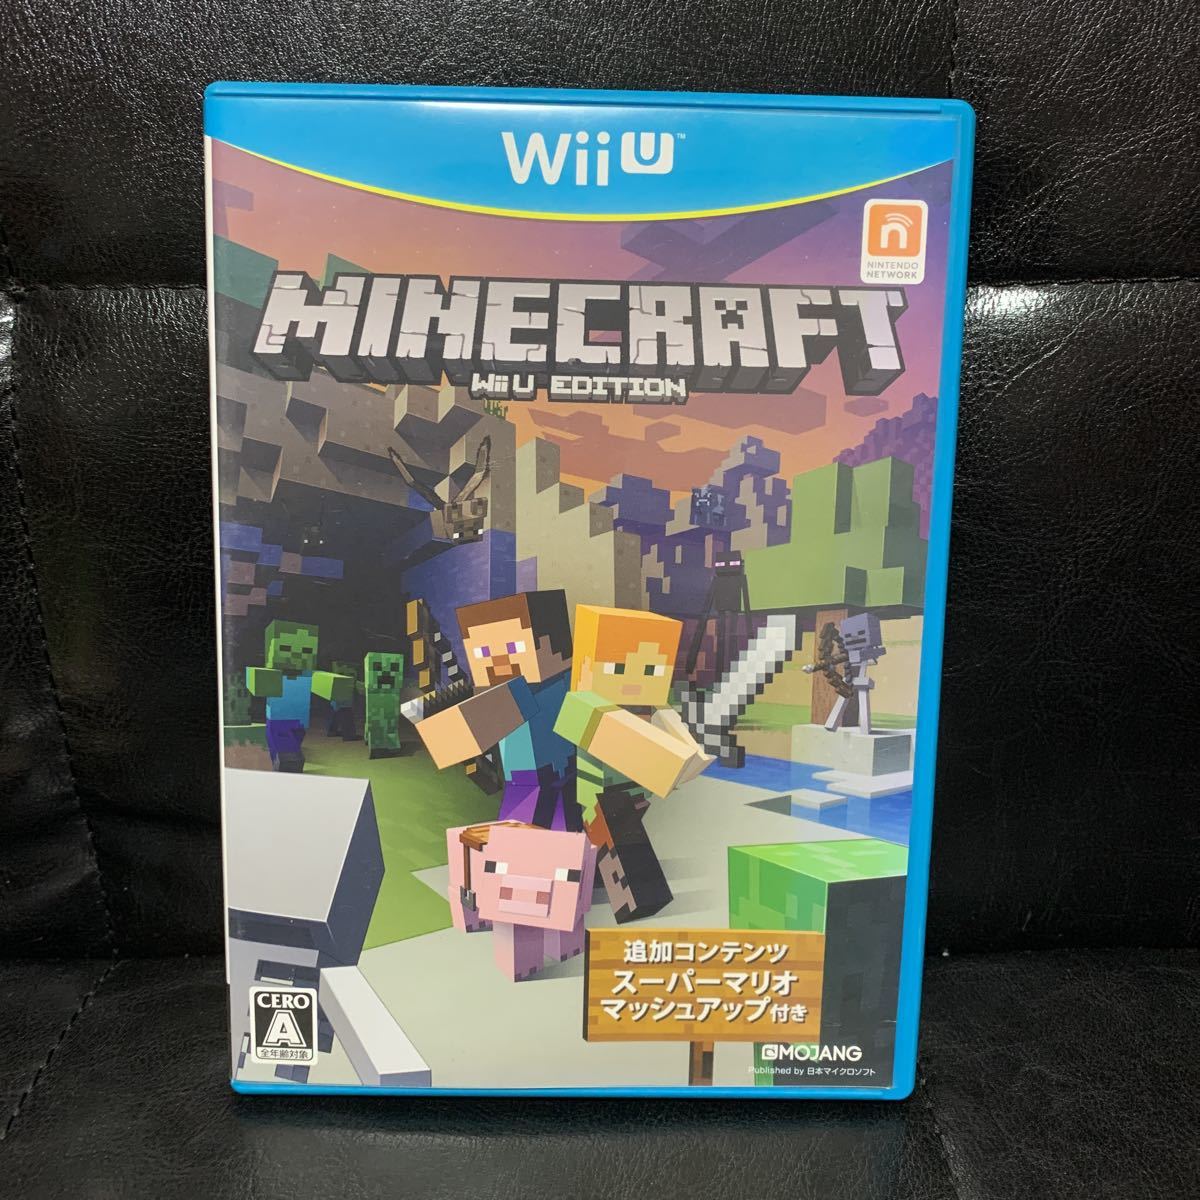 Wii U マインクラフト Minecraft Wiiu Edition Wii U専用ソフト 売買されたオークション情報 Yahooの商品情報をアーカイブ公開 オークファン Aucfan Com